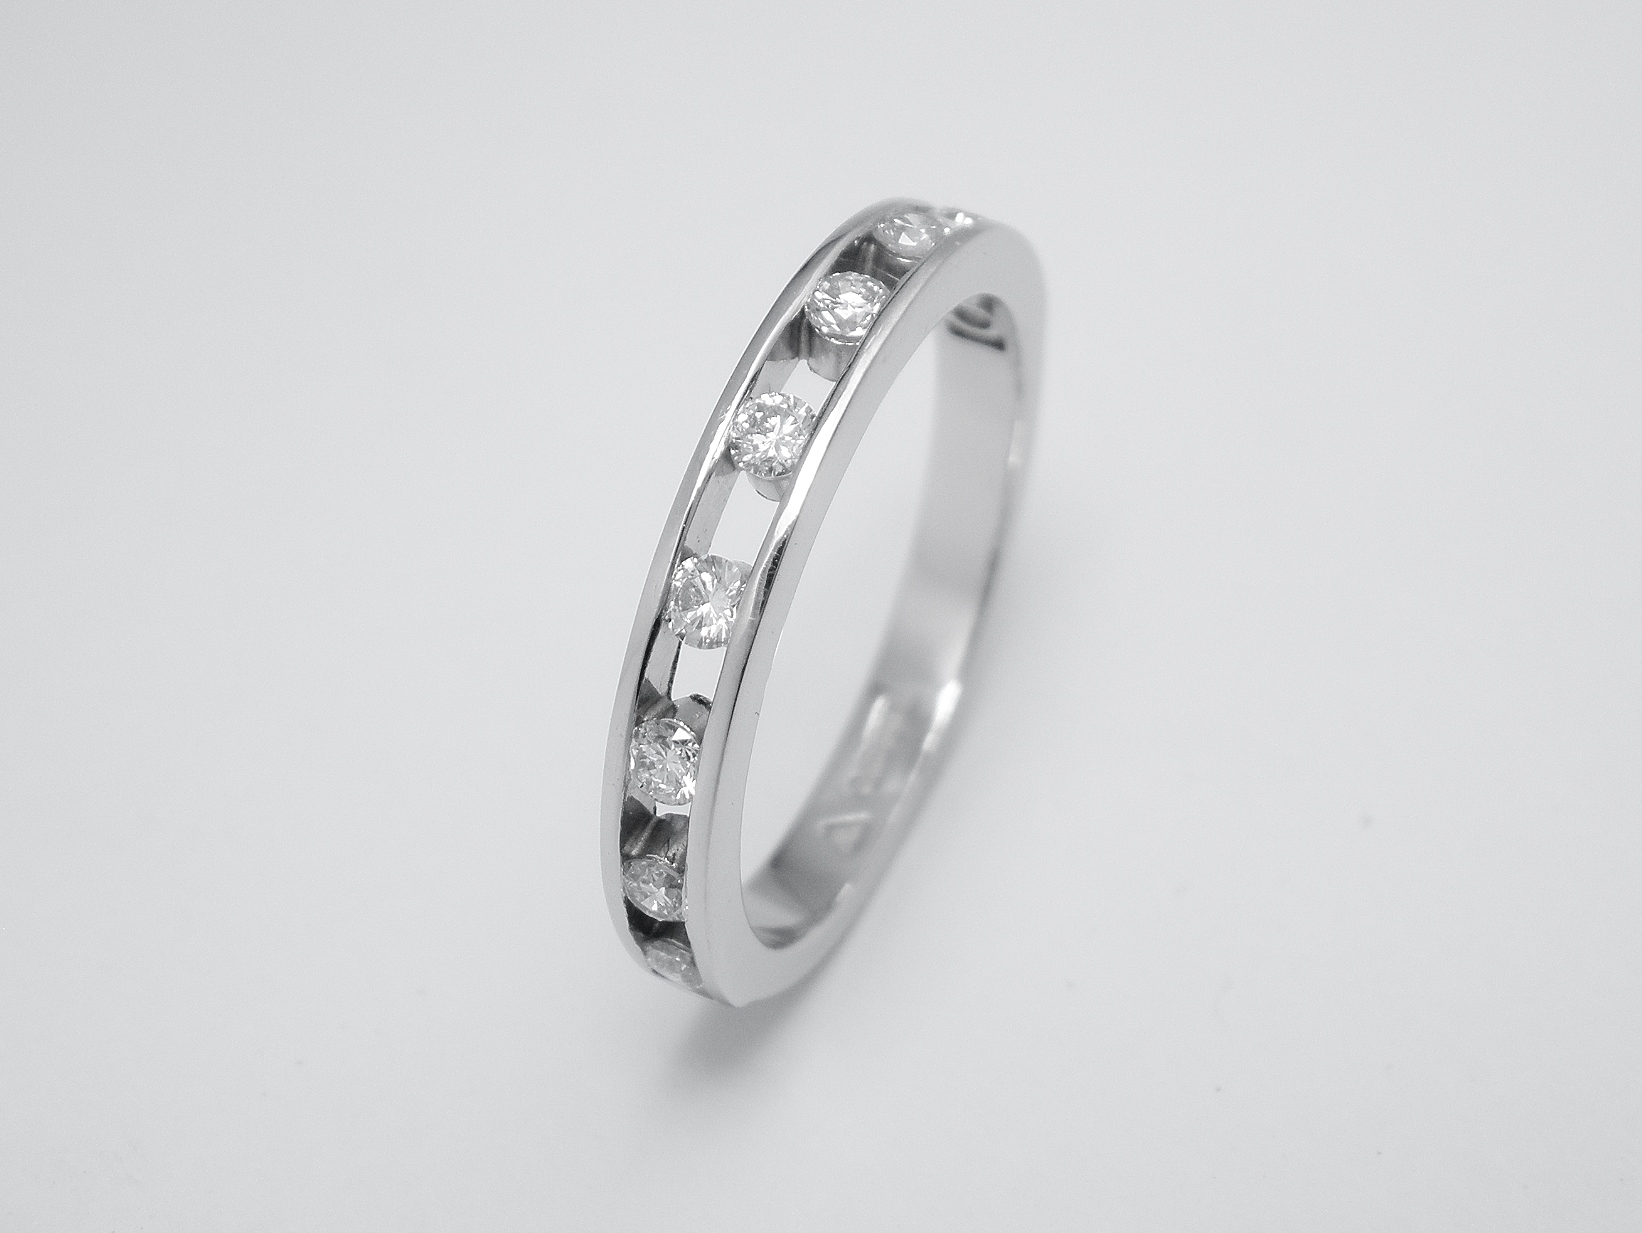 Platinum spaced channel set round brilliant cut diamond eternity ring.